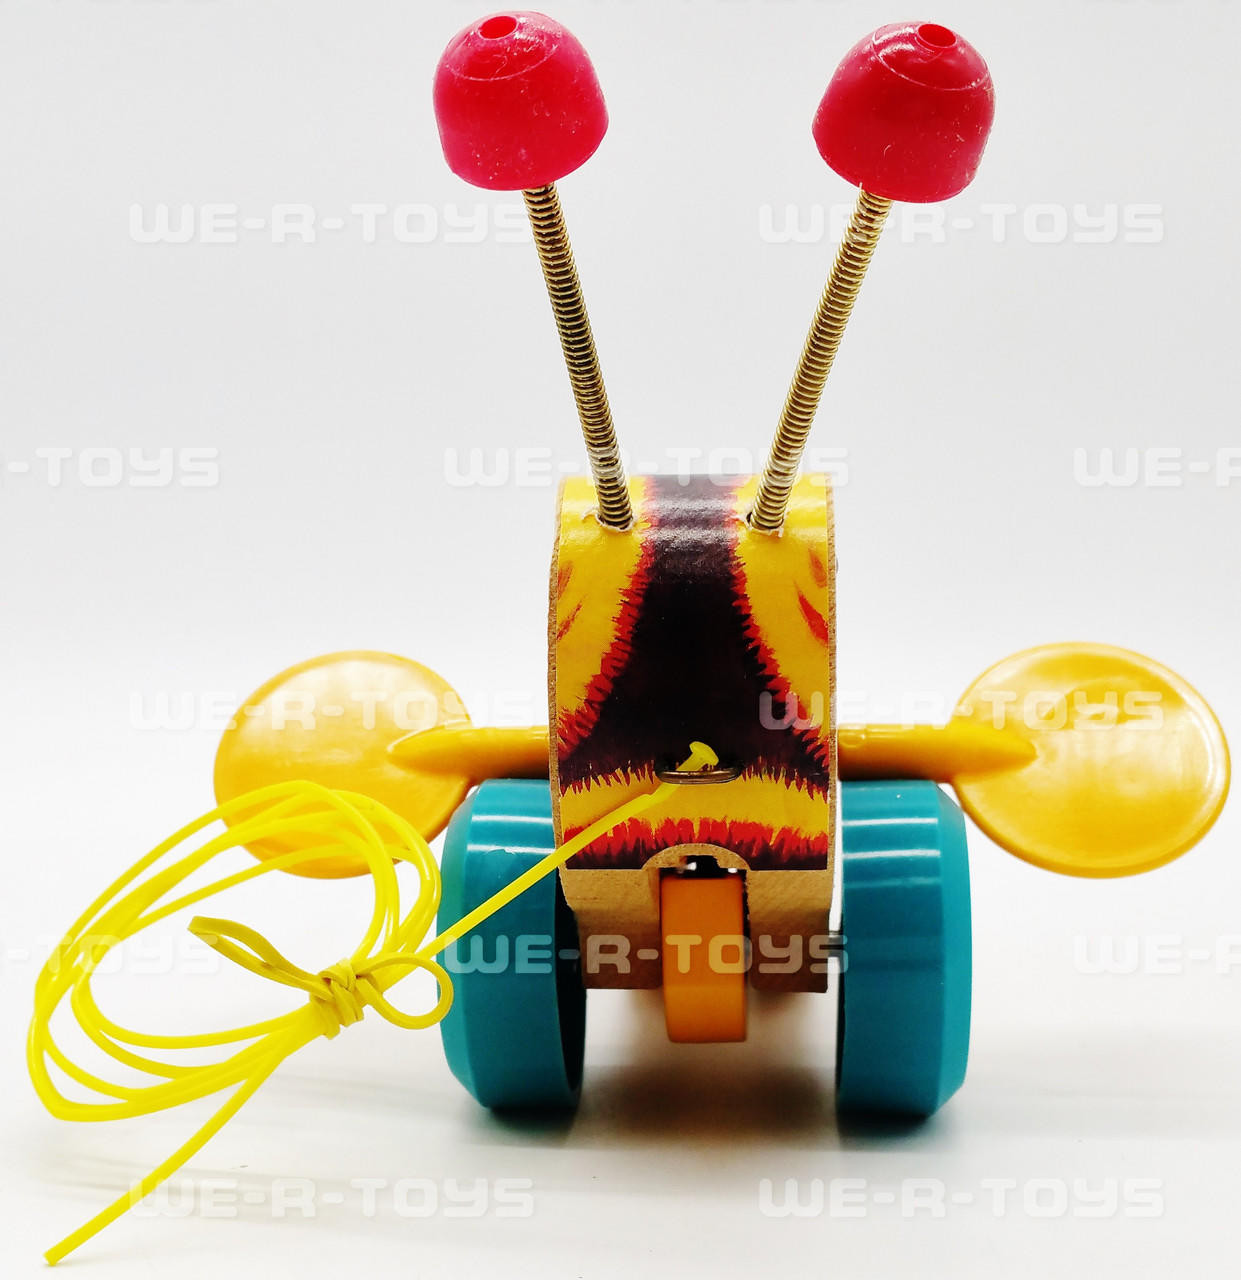 Buzzy Bee toy - Moore Wilson's